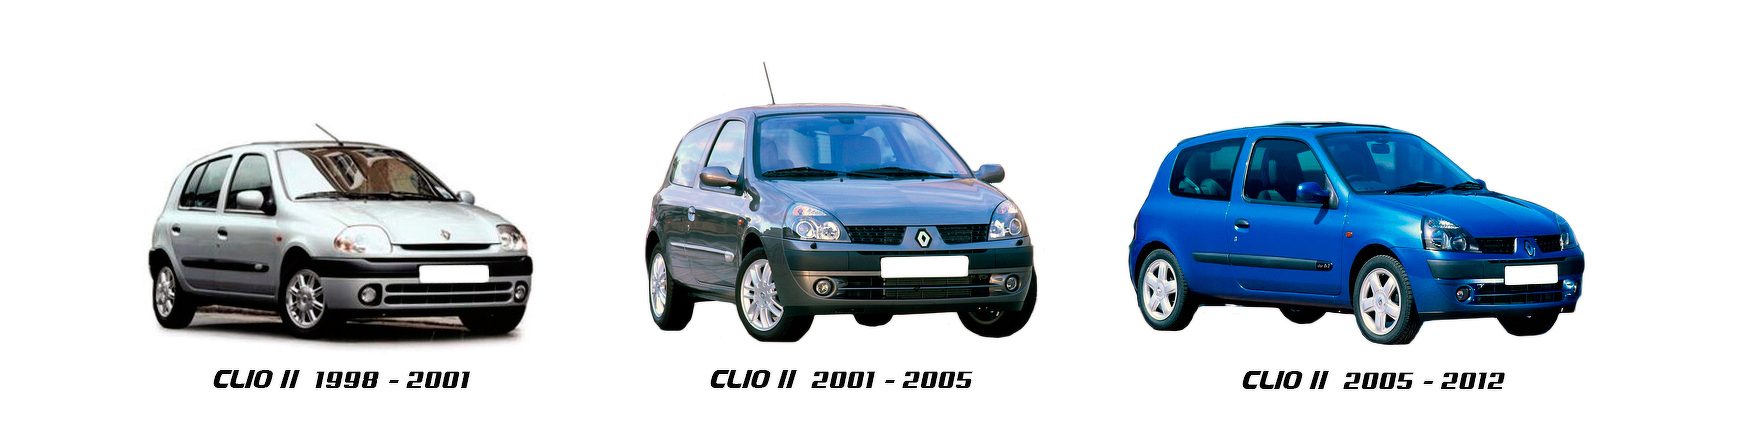 renault clio 2001 2002 2003 2004 2005 catalogo piezas auto online